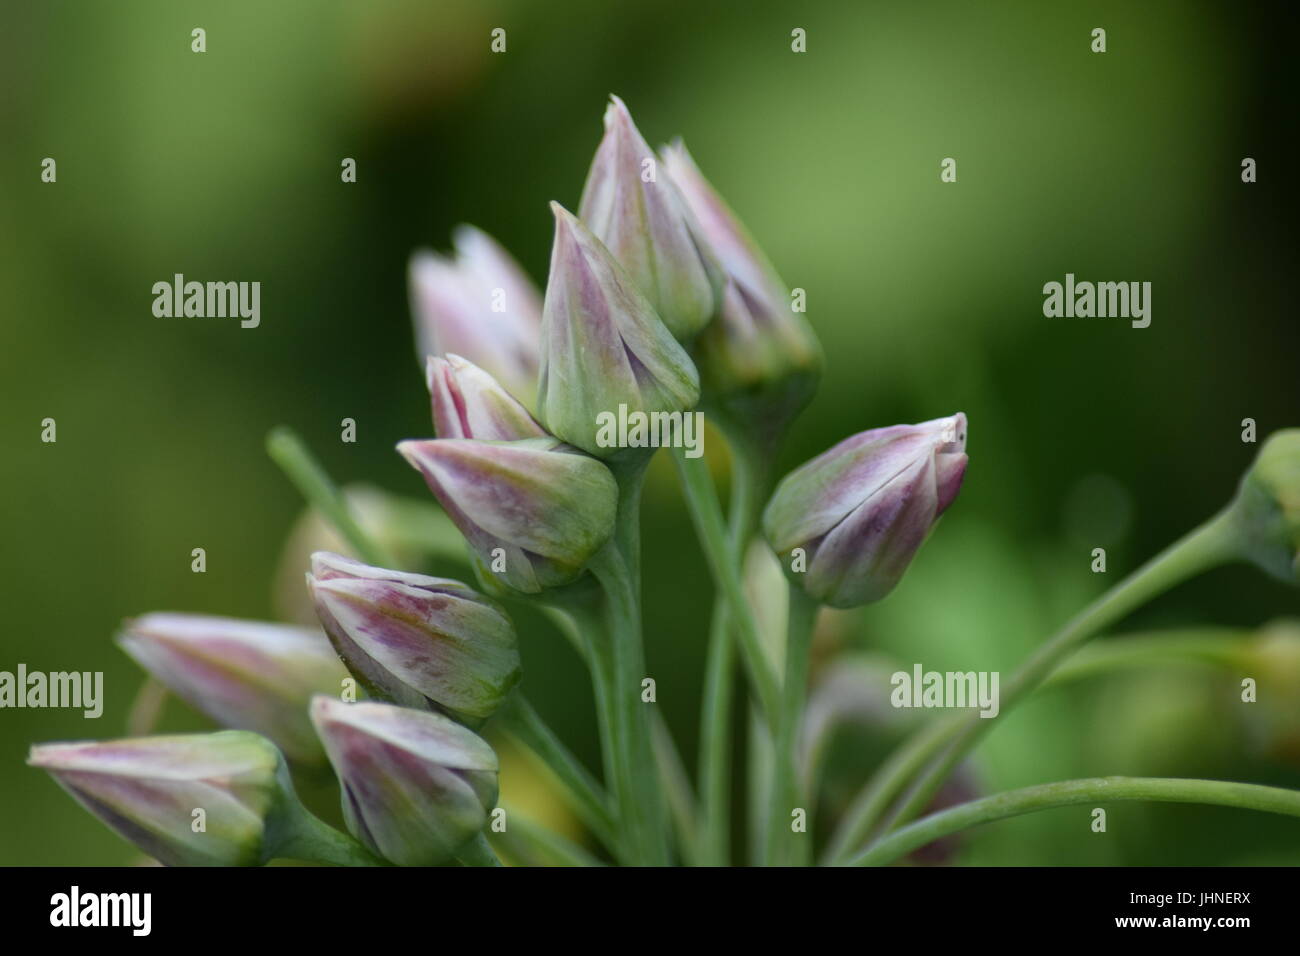 Allium flowers Stock Photo